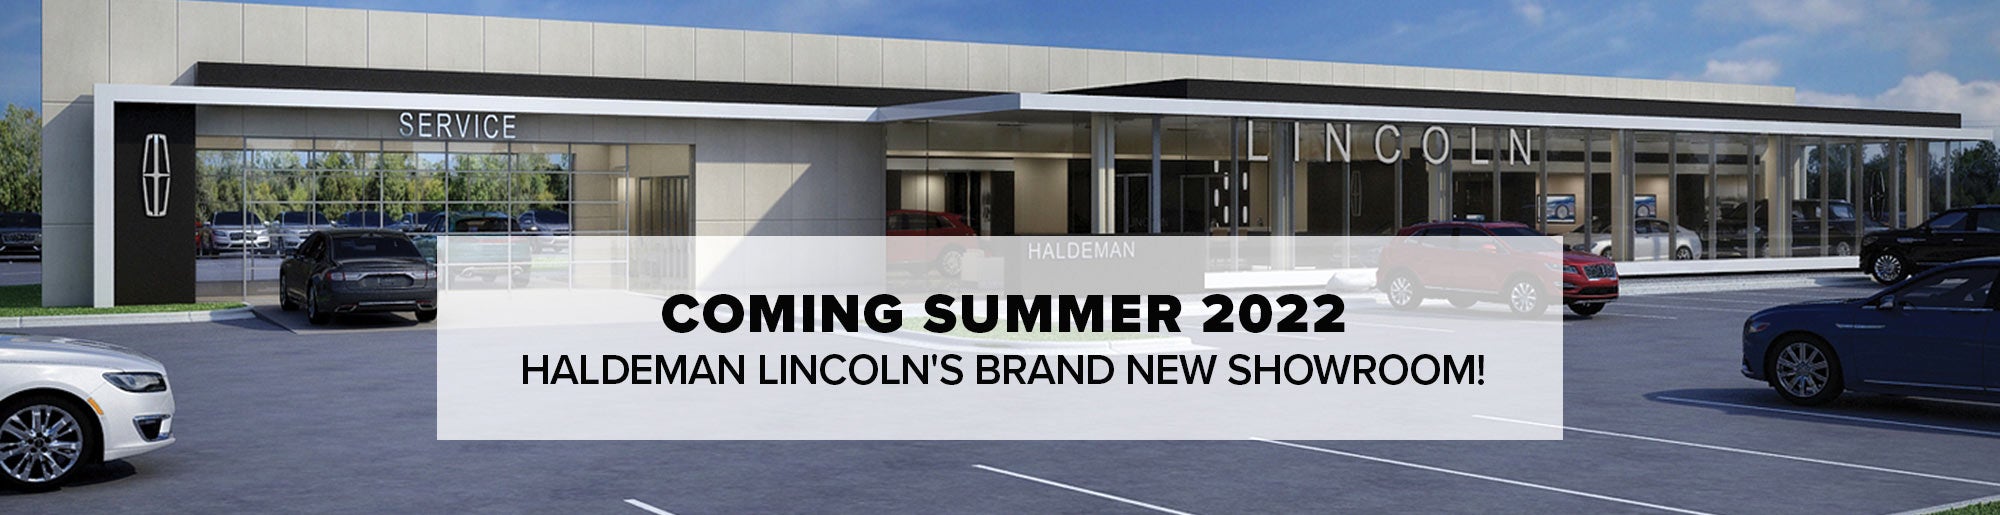 Haldeman Lincoln's Brand New Showroom